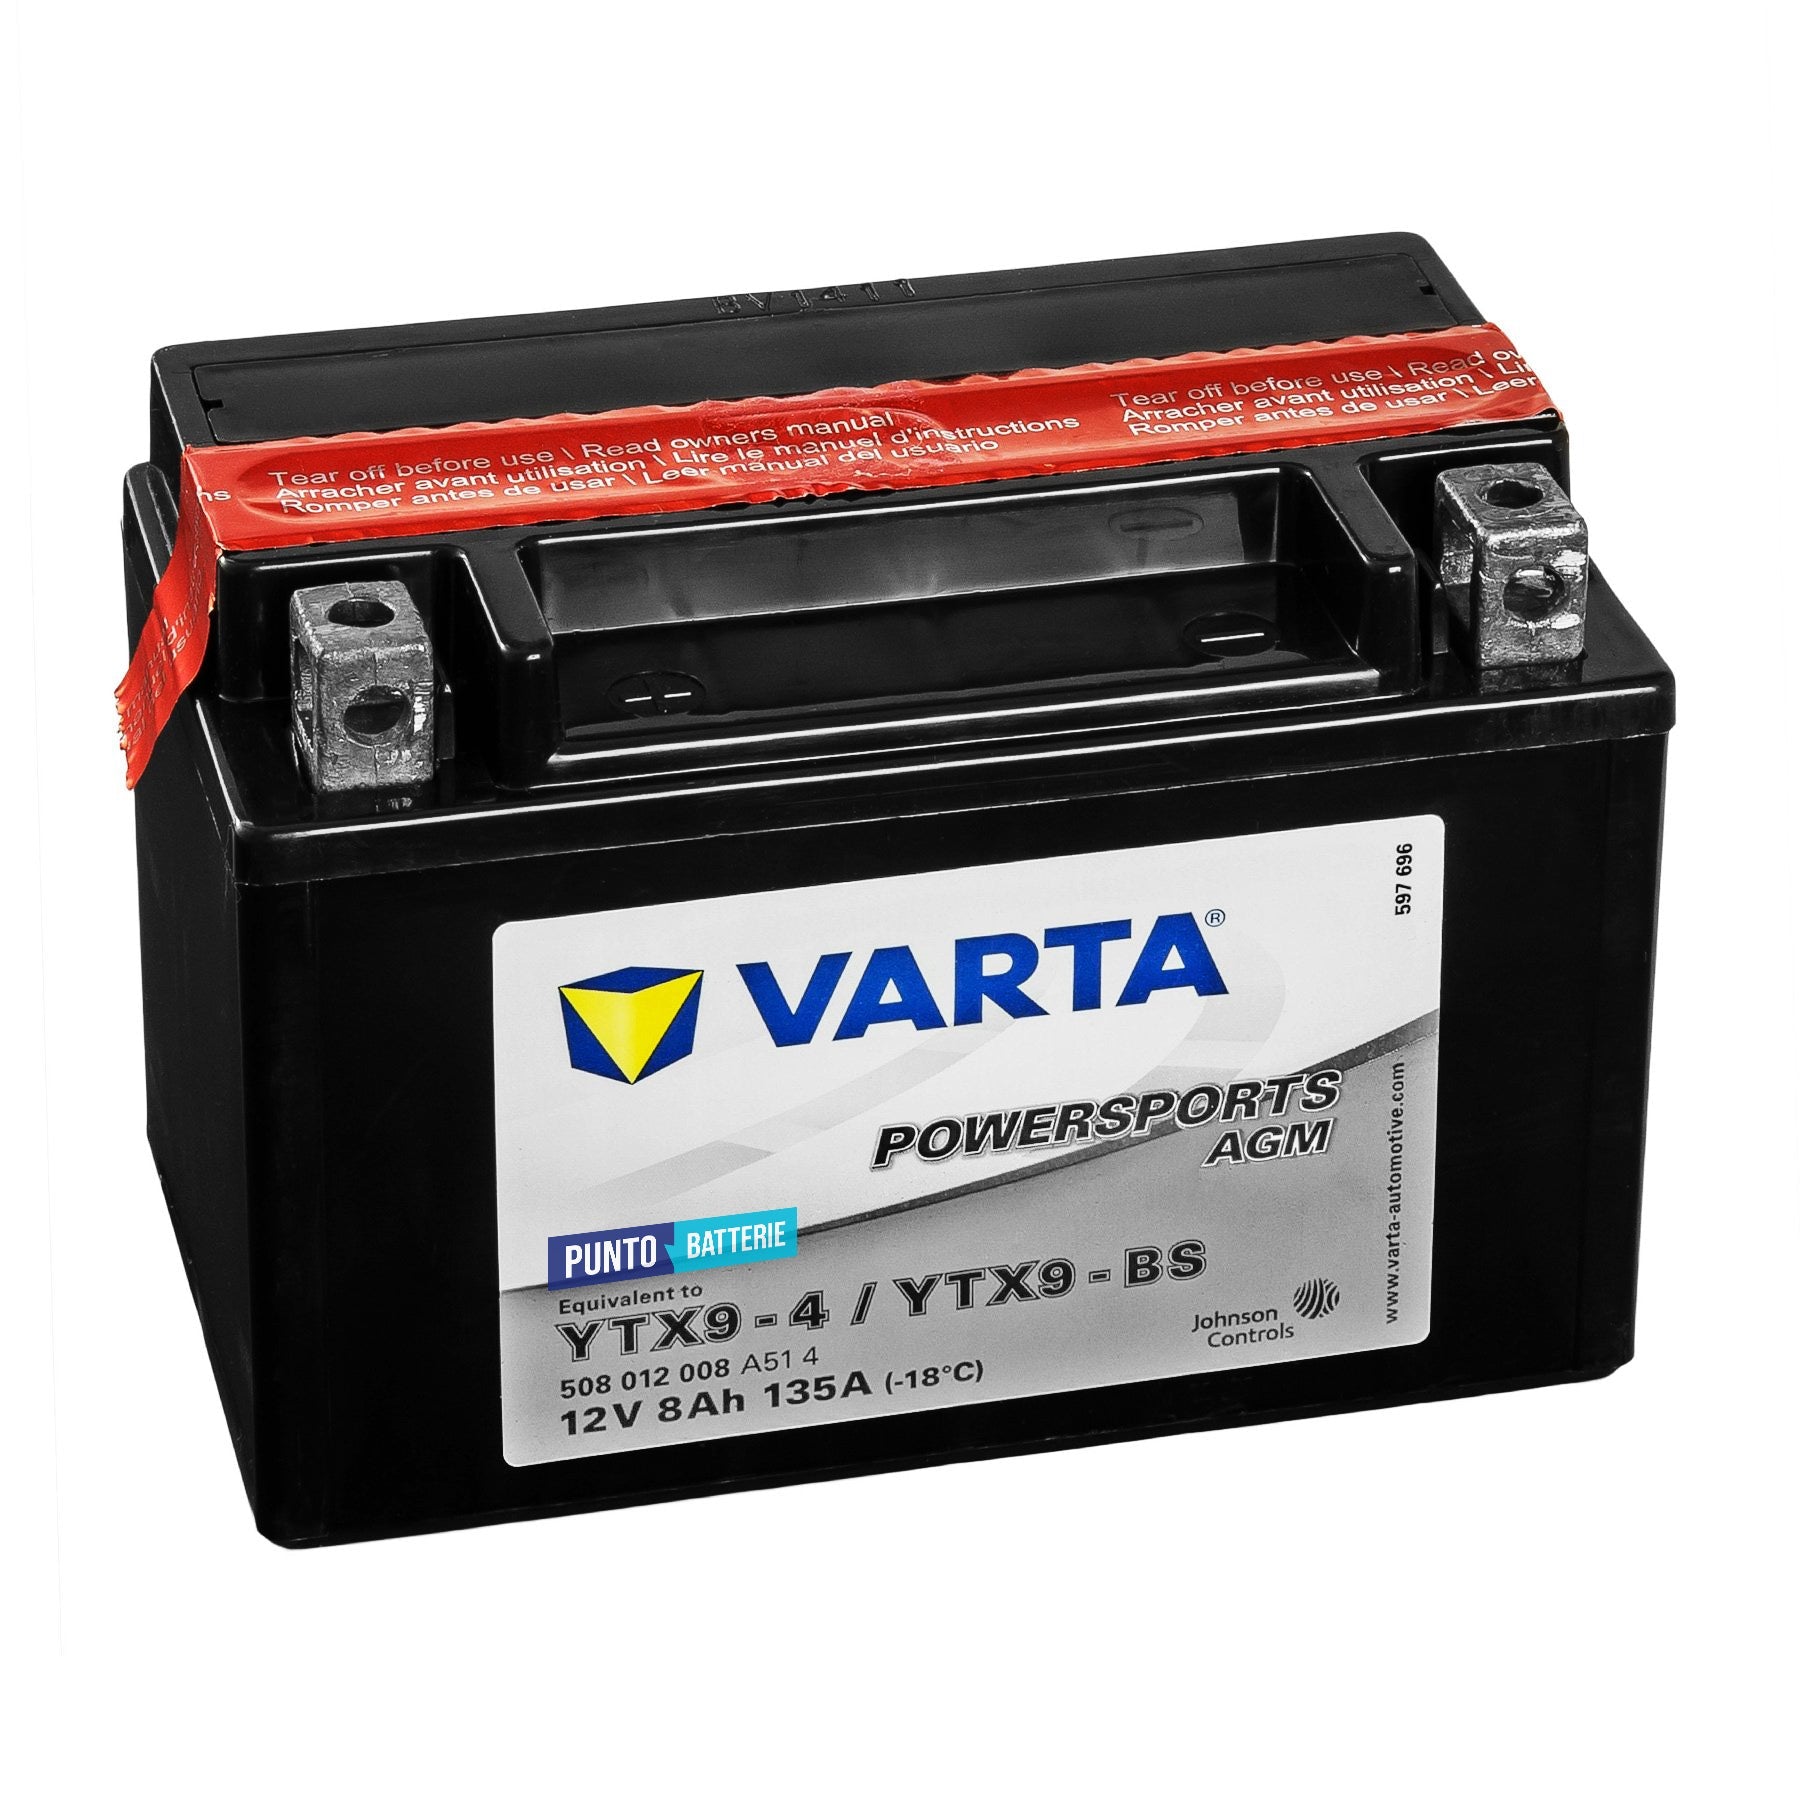 Batteria originale Varta Powersport AGM YTX9-4, dimensioni 152 x 88 x 131, polo positivo a sinistra, 12 volt, 8 amperora, 135 ampere. Batteria per moto, scooter e powersport.